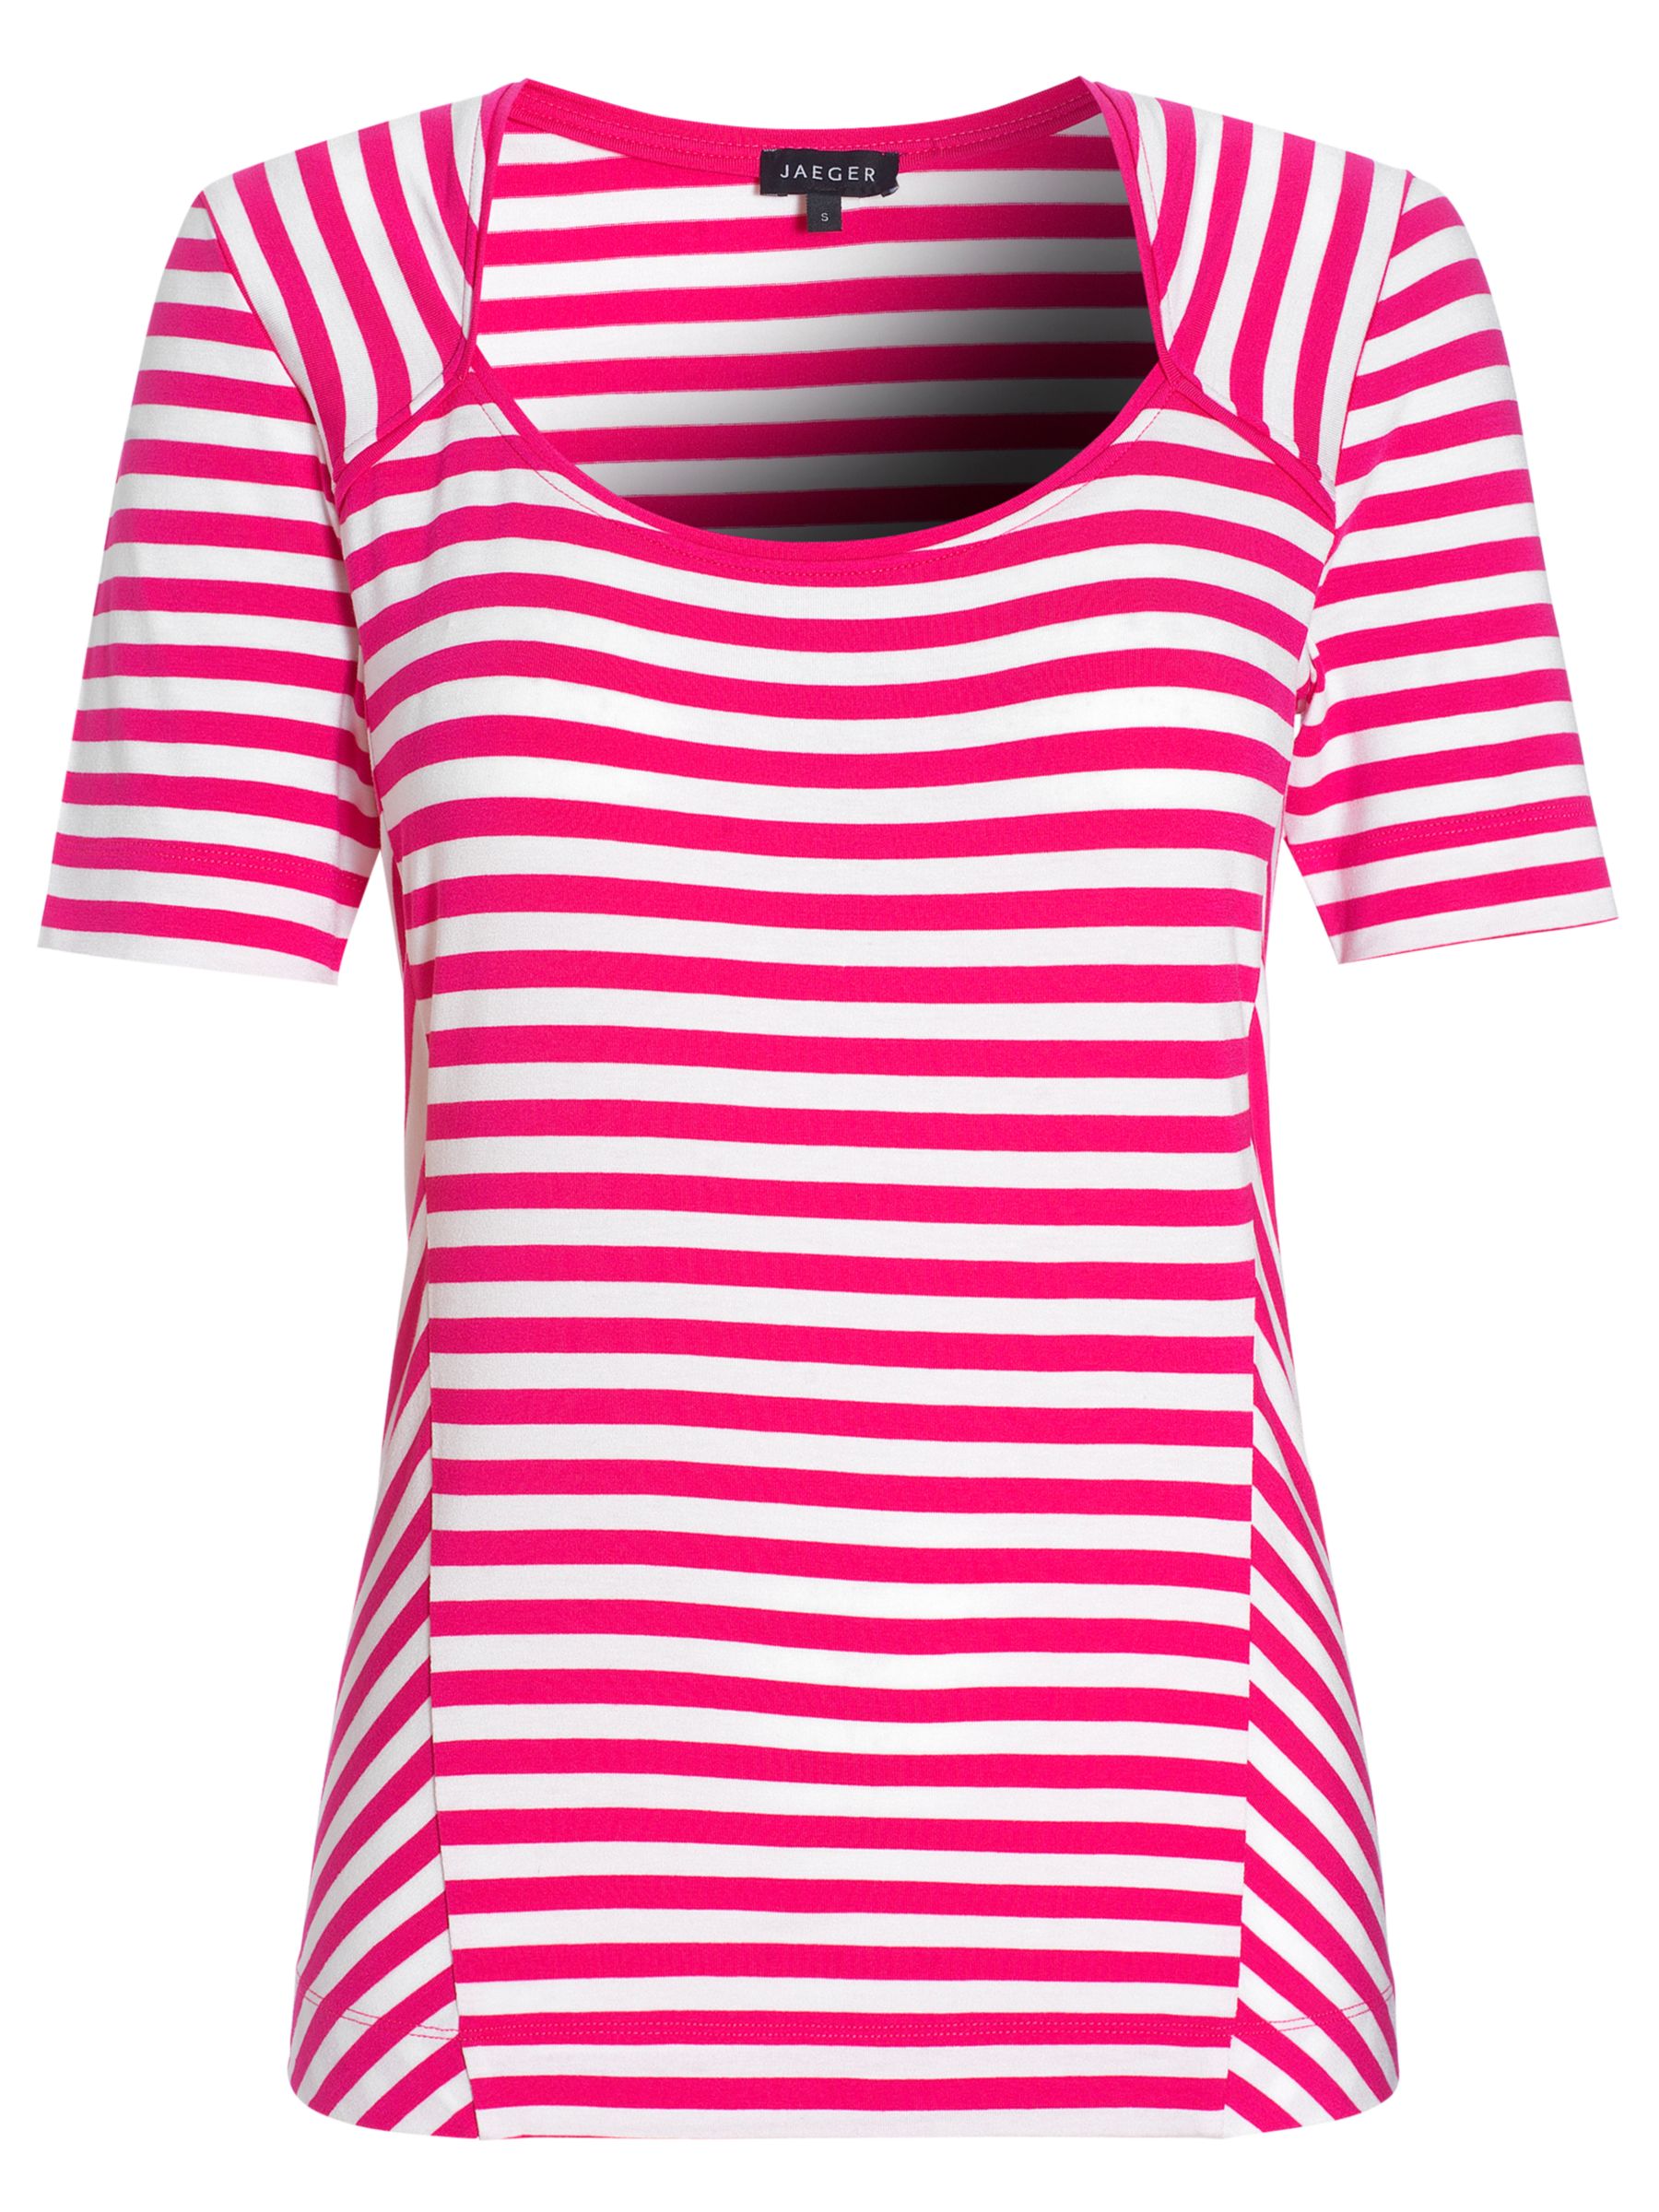 Stripe Jersey T-Shirt, Hot pink